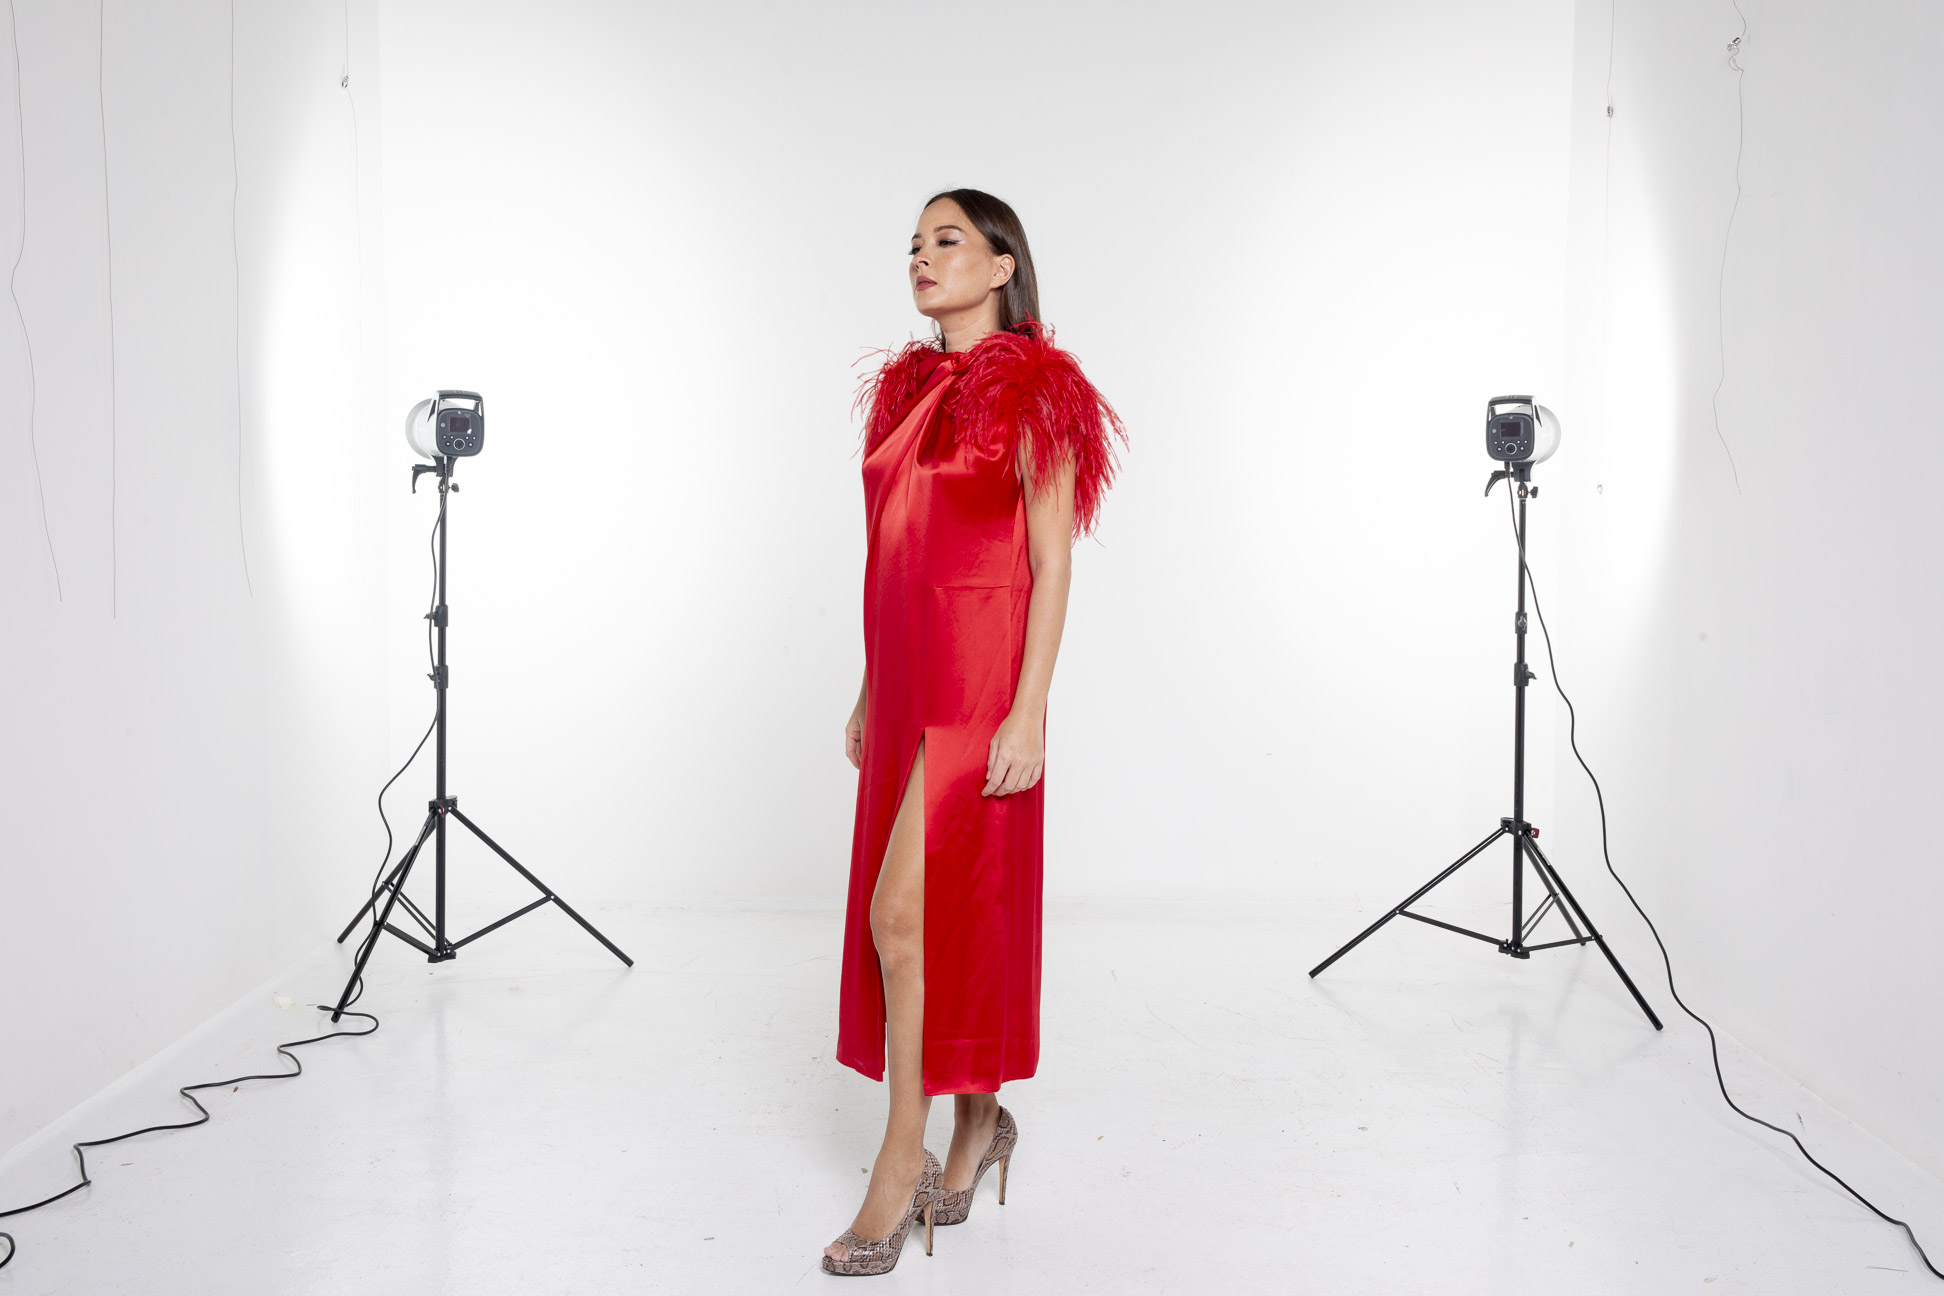 A 16ARLINGTON 'YOSHINA' RED FEATHER DRESS - Image 2 of 4